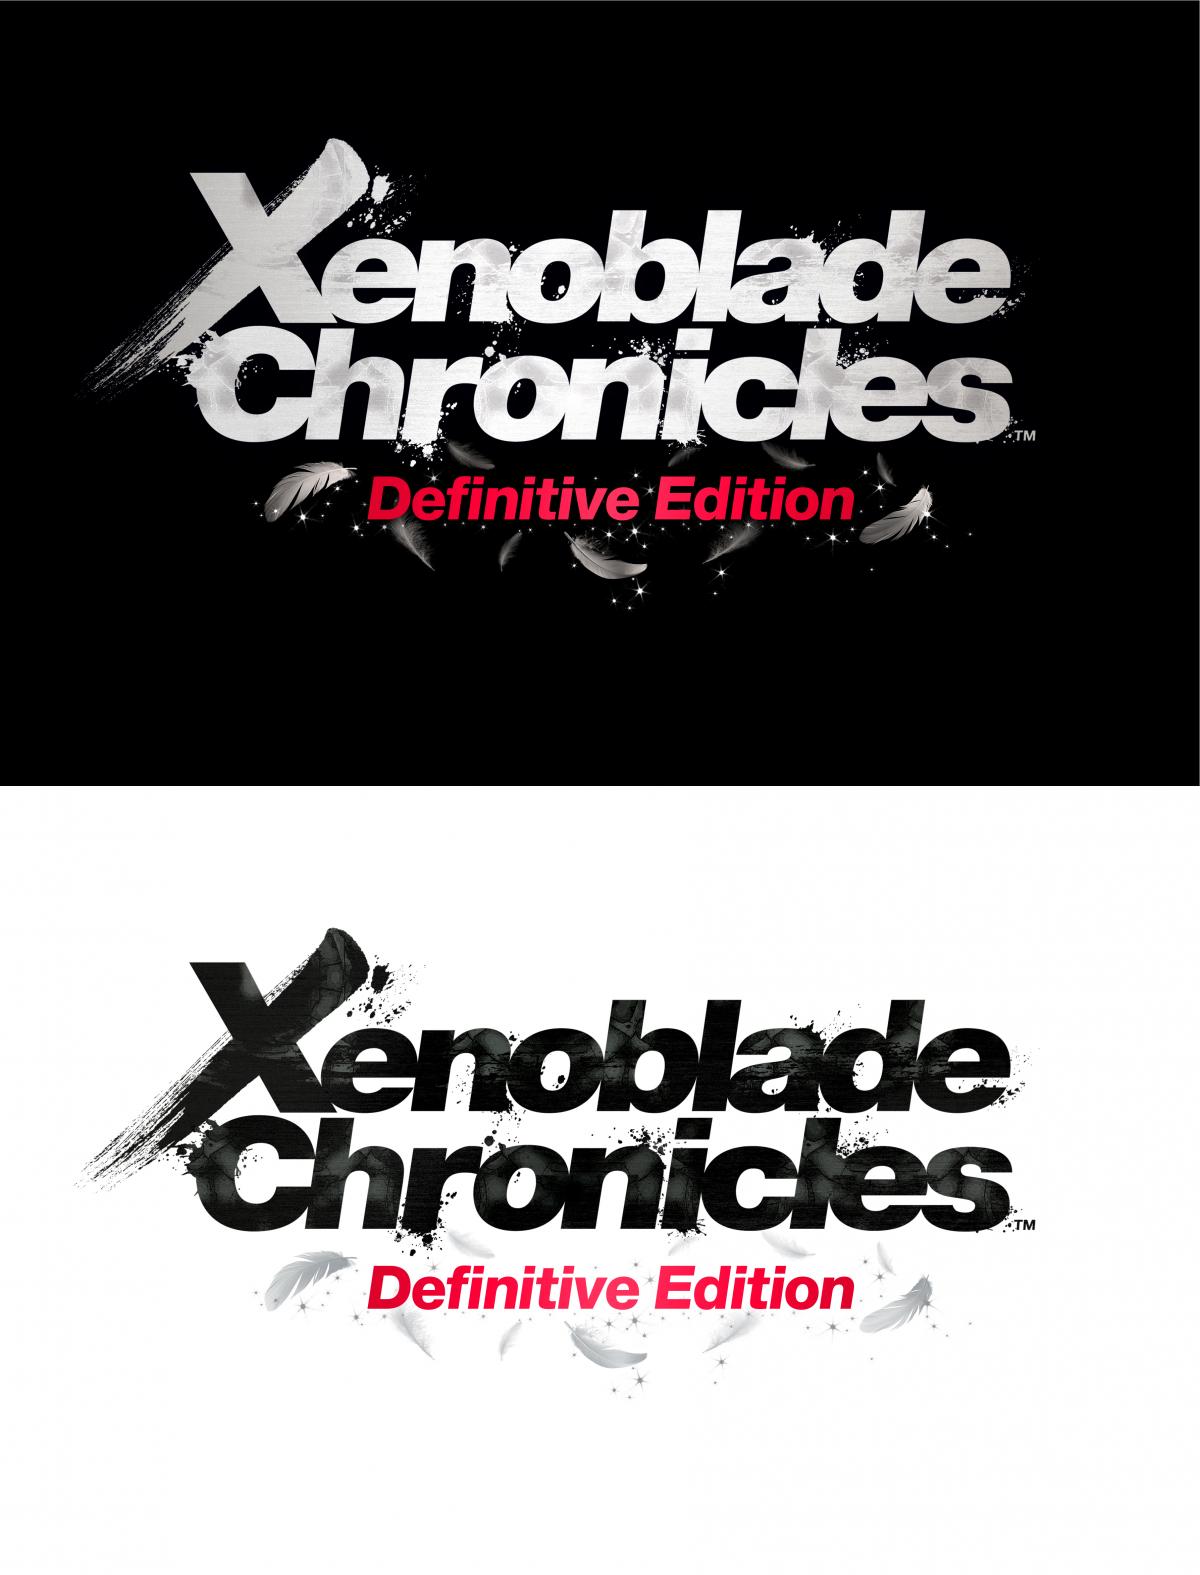 Image Xenoblade Chronicles : Definitive Edition 13